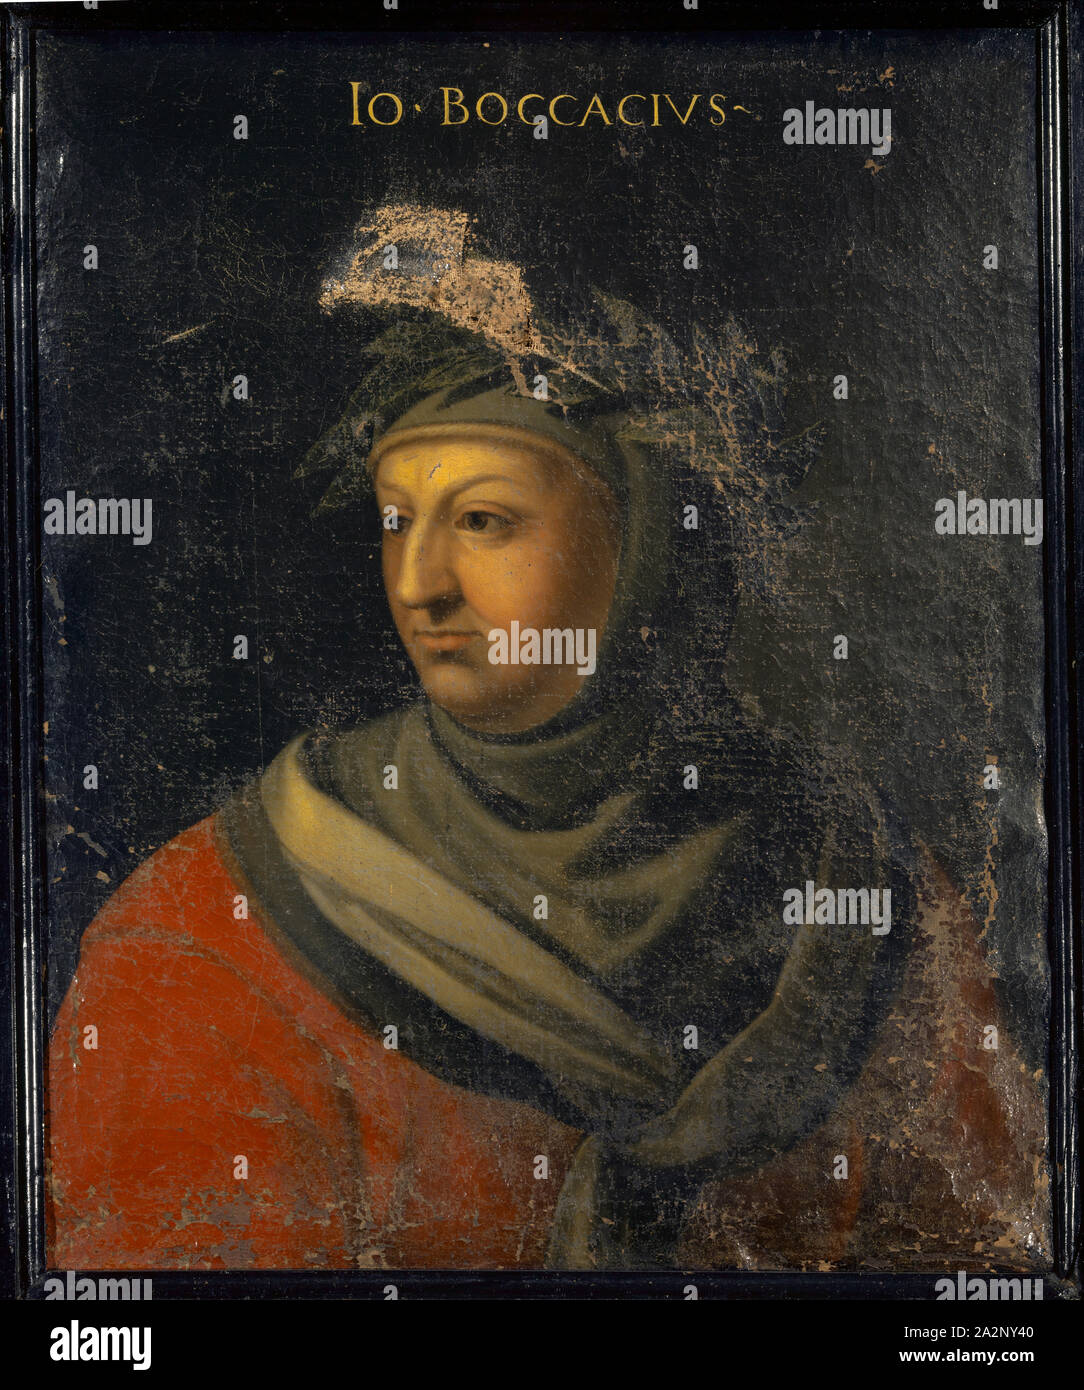 Portrait von Giovanni Boccaccio, Öl auf Leinwand, 76,5 x 62 cm, nicht angegeben., Oben: IO [ANNES] • BOCCACIVS-, Pier Francesco Mola (di Papi) dell'Altissimo, (30 Spitzwimpel //Kopieren nach), um 1525 - 1605 Florenz Stockfoto